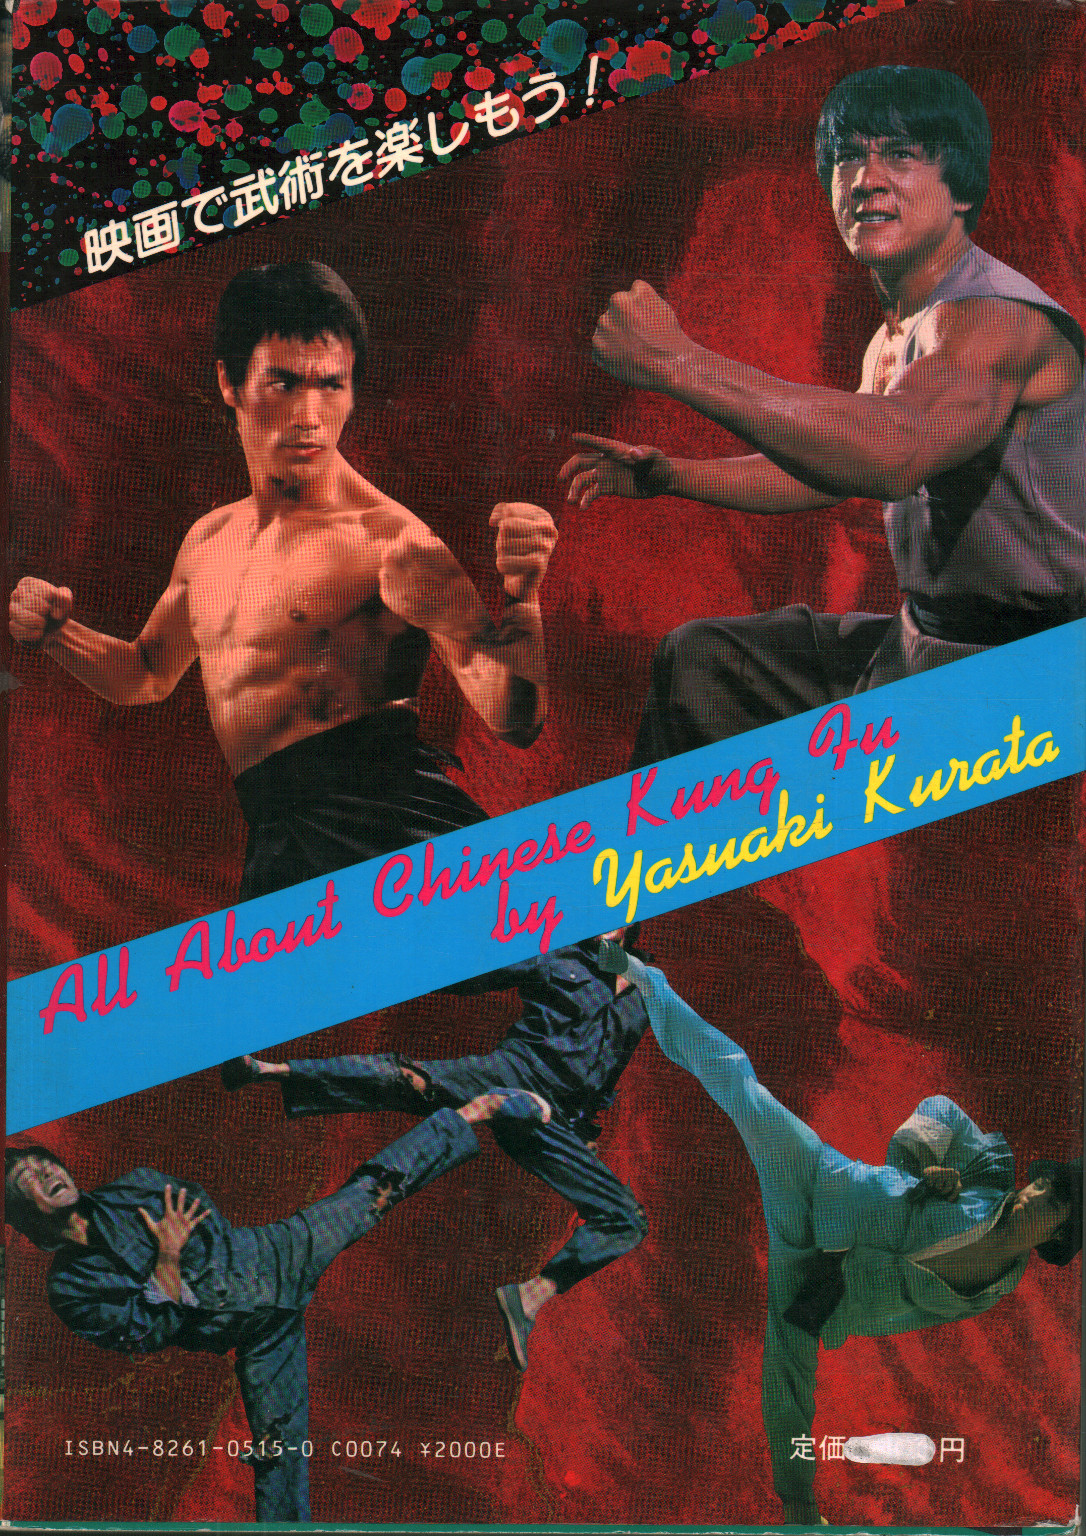 Alles über chinesisches Kung Fu, Yasuaki Kurata